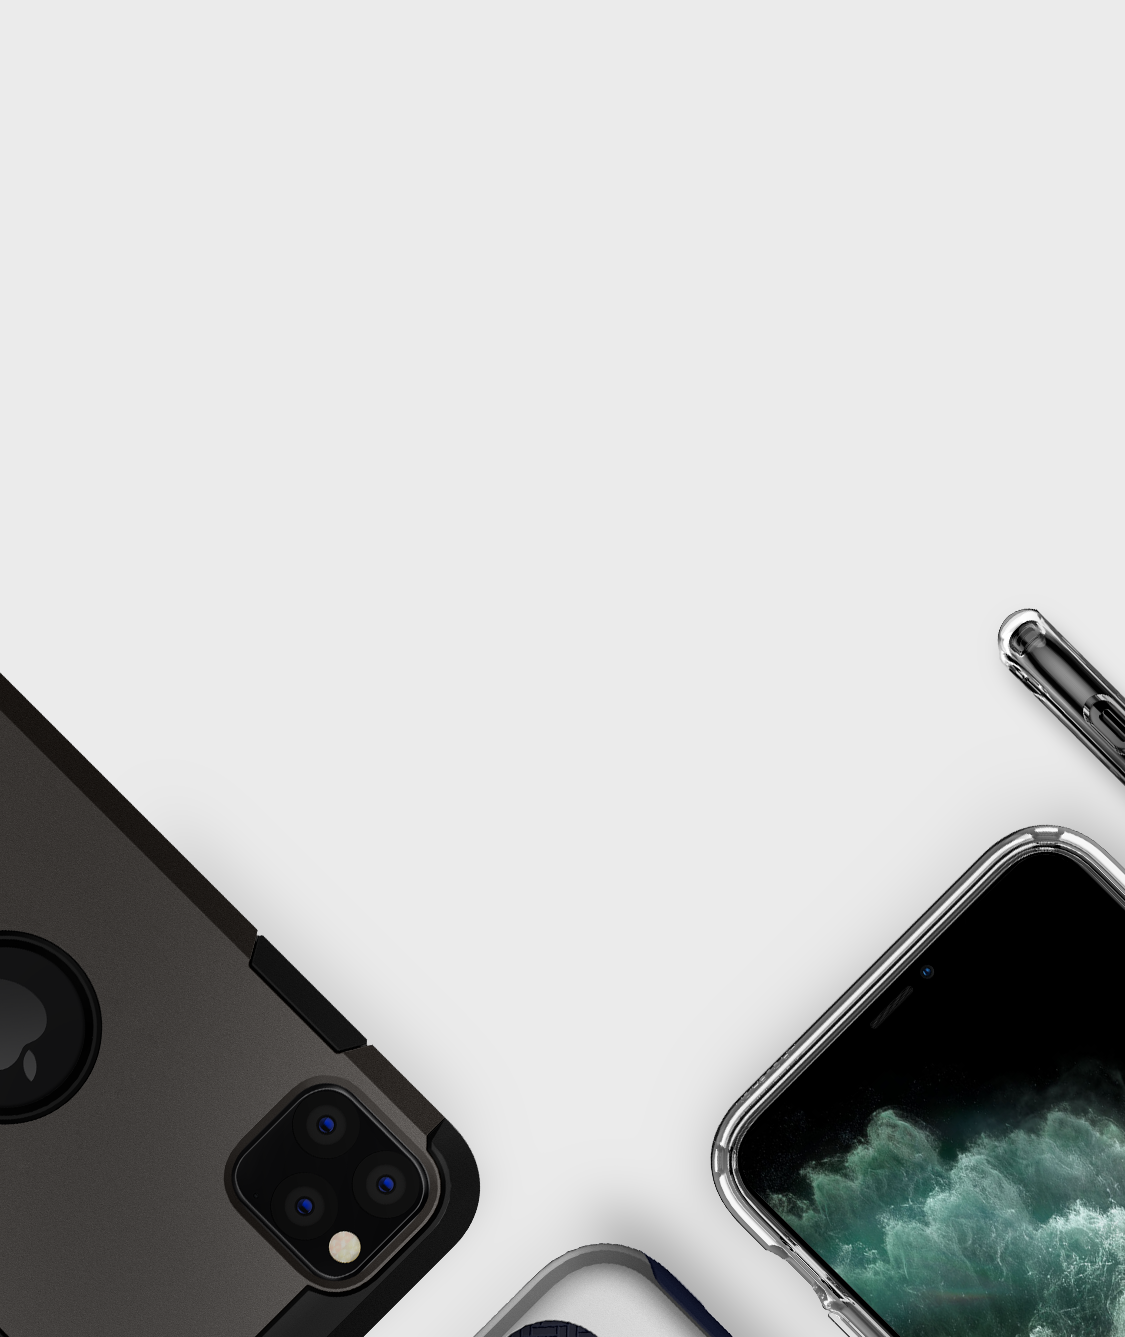 Spigen Cases for iPhone 11 Pro Max